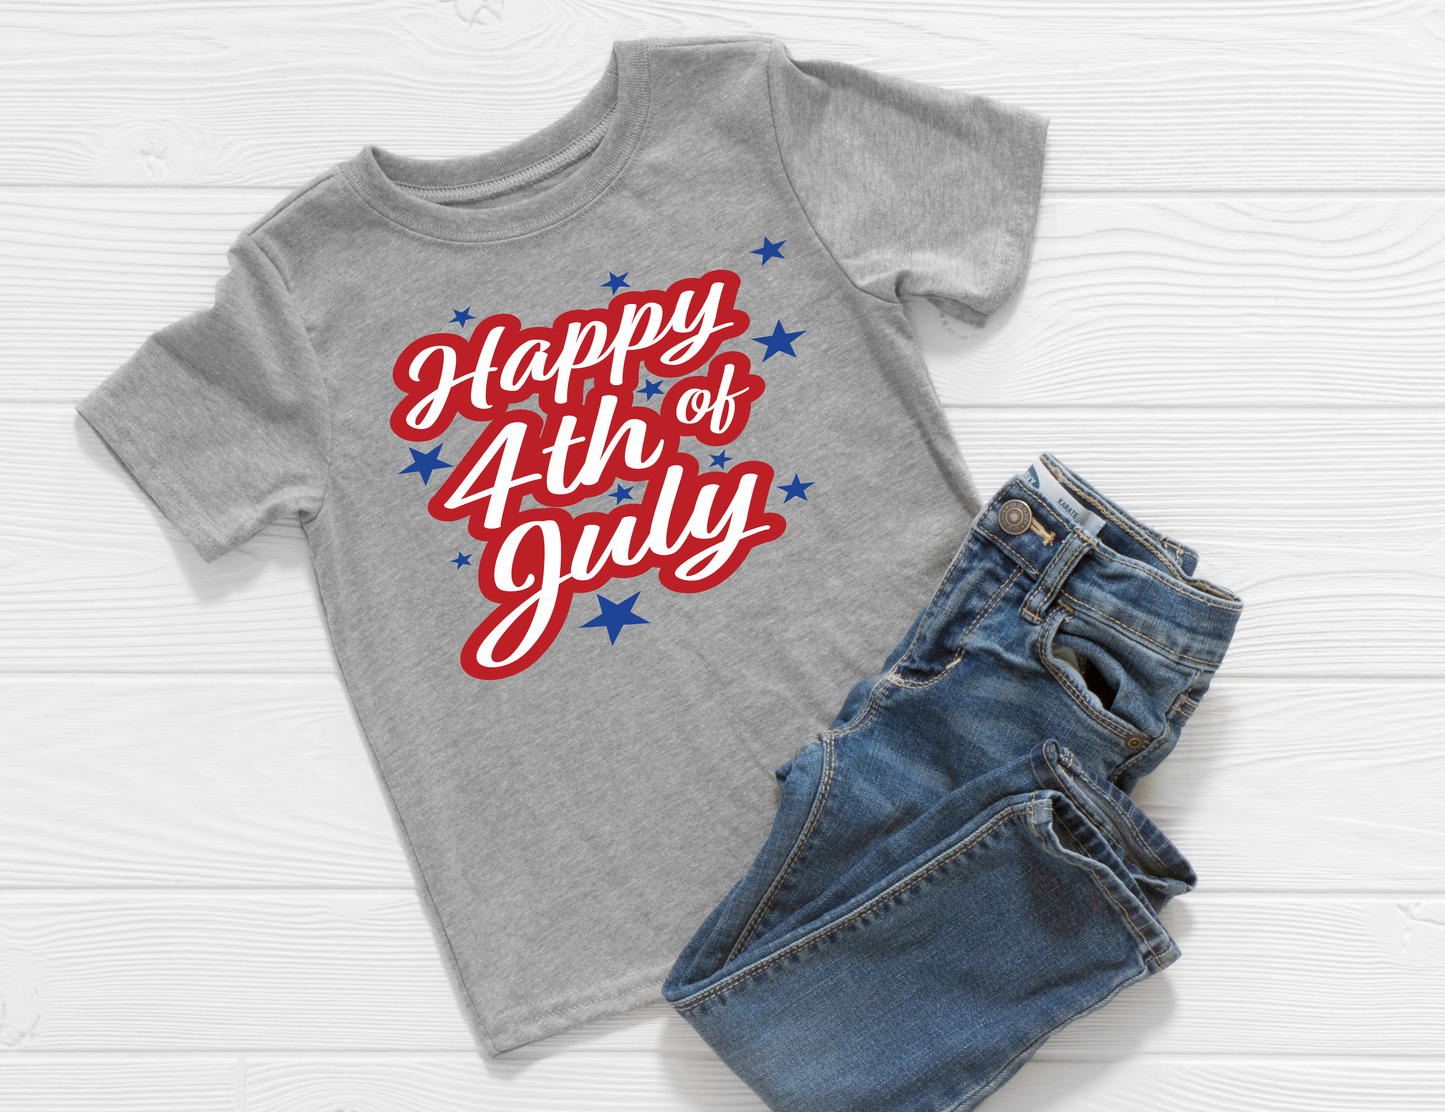 4th of July kids shirts | Sandrepersonalization.